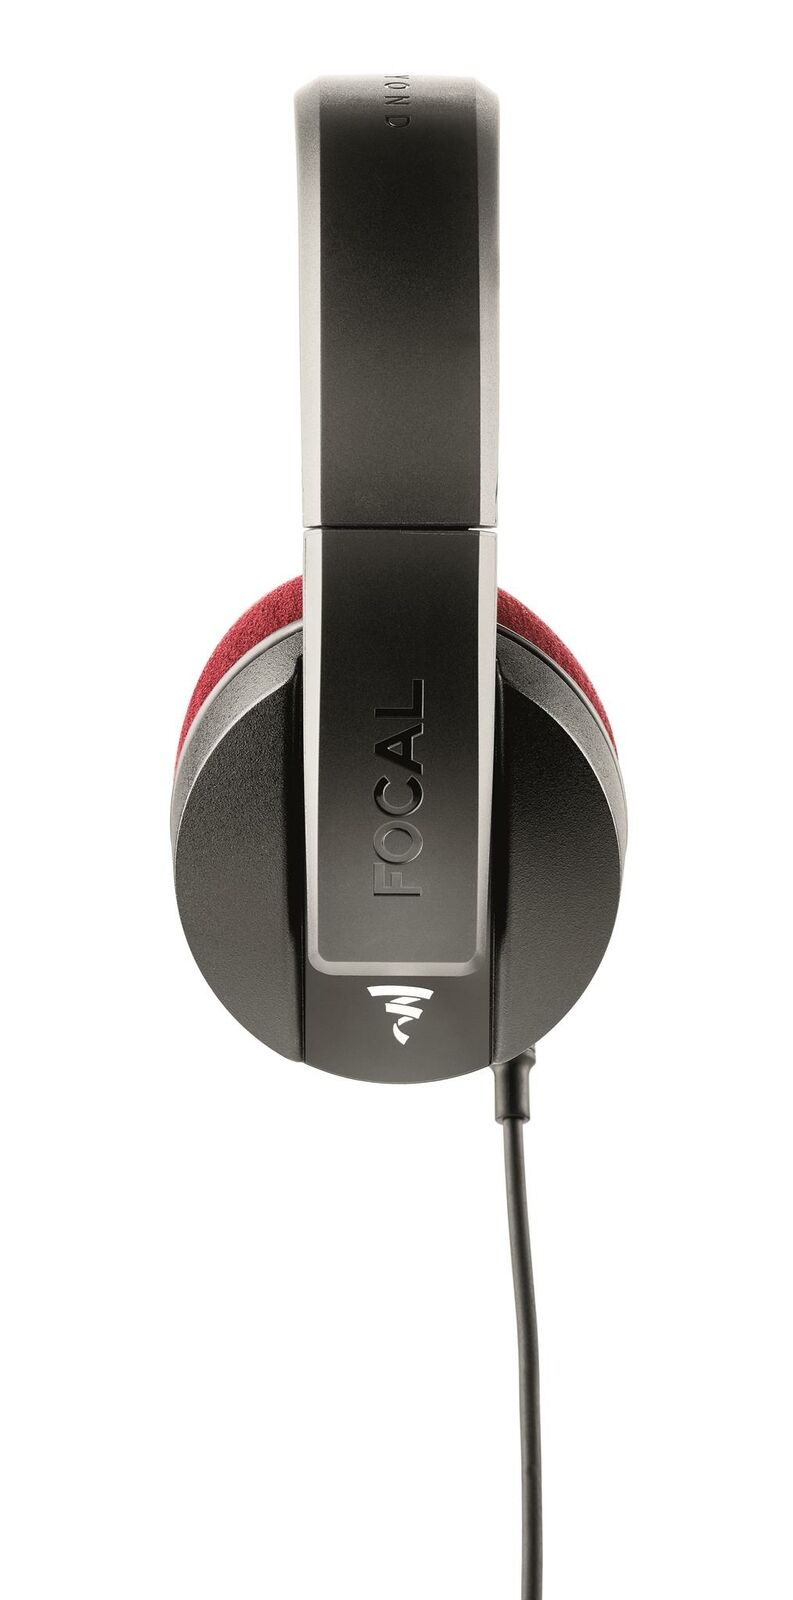 New Focal Pro Listen Professional Closed-Back Headphones